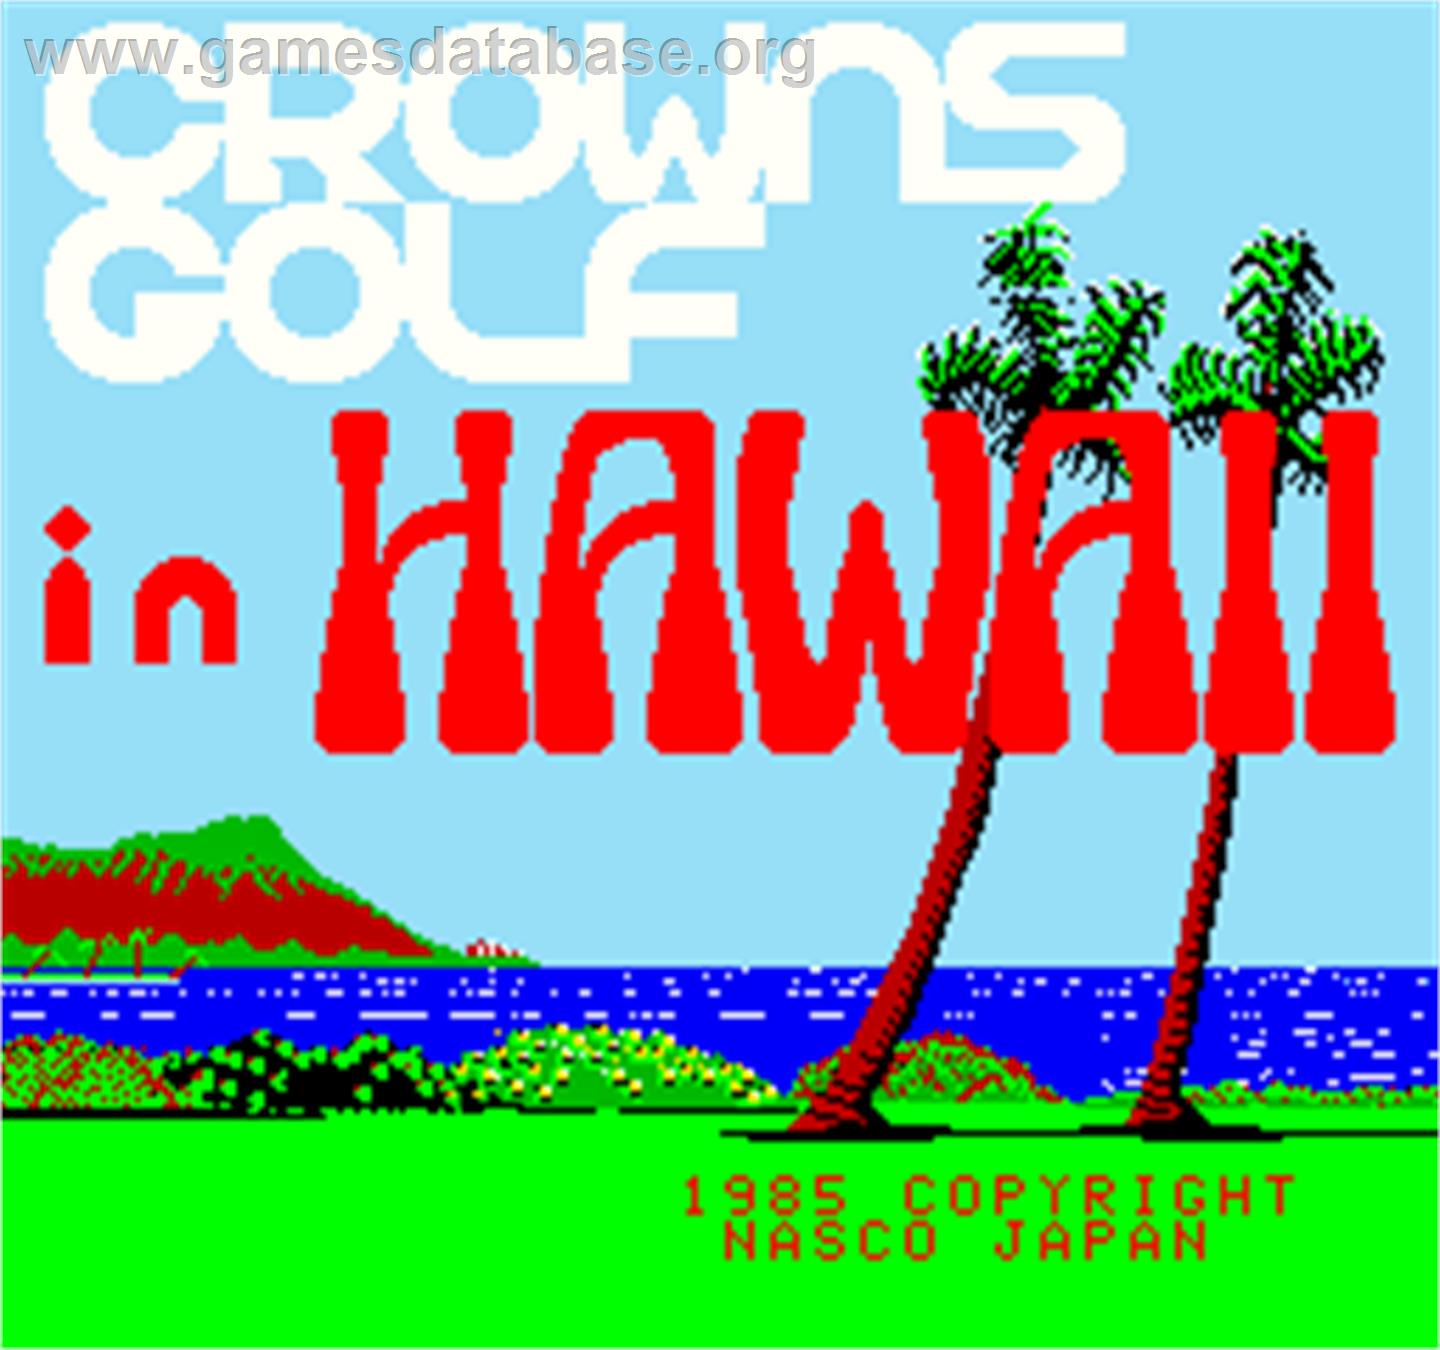 Crowns Golf in Hawaii - Arcade - Artwork - Title Screen